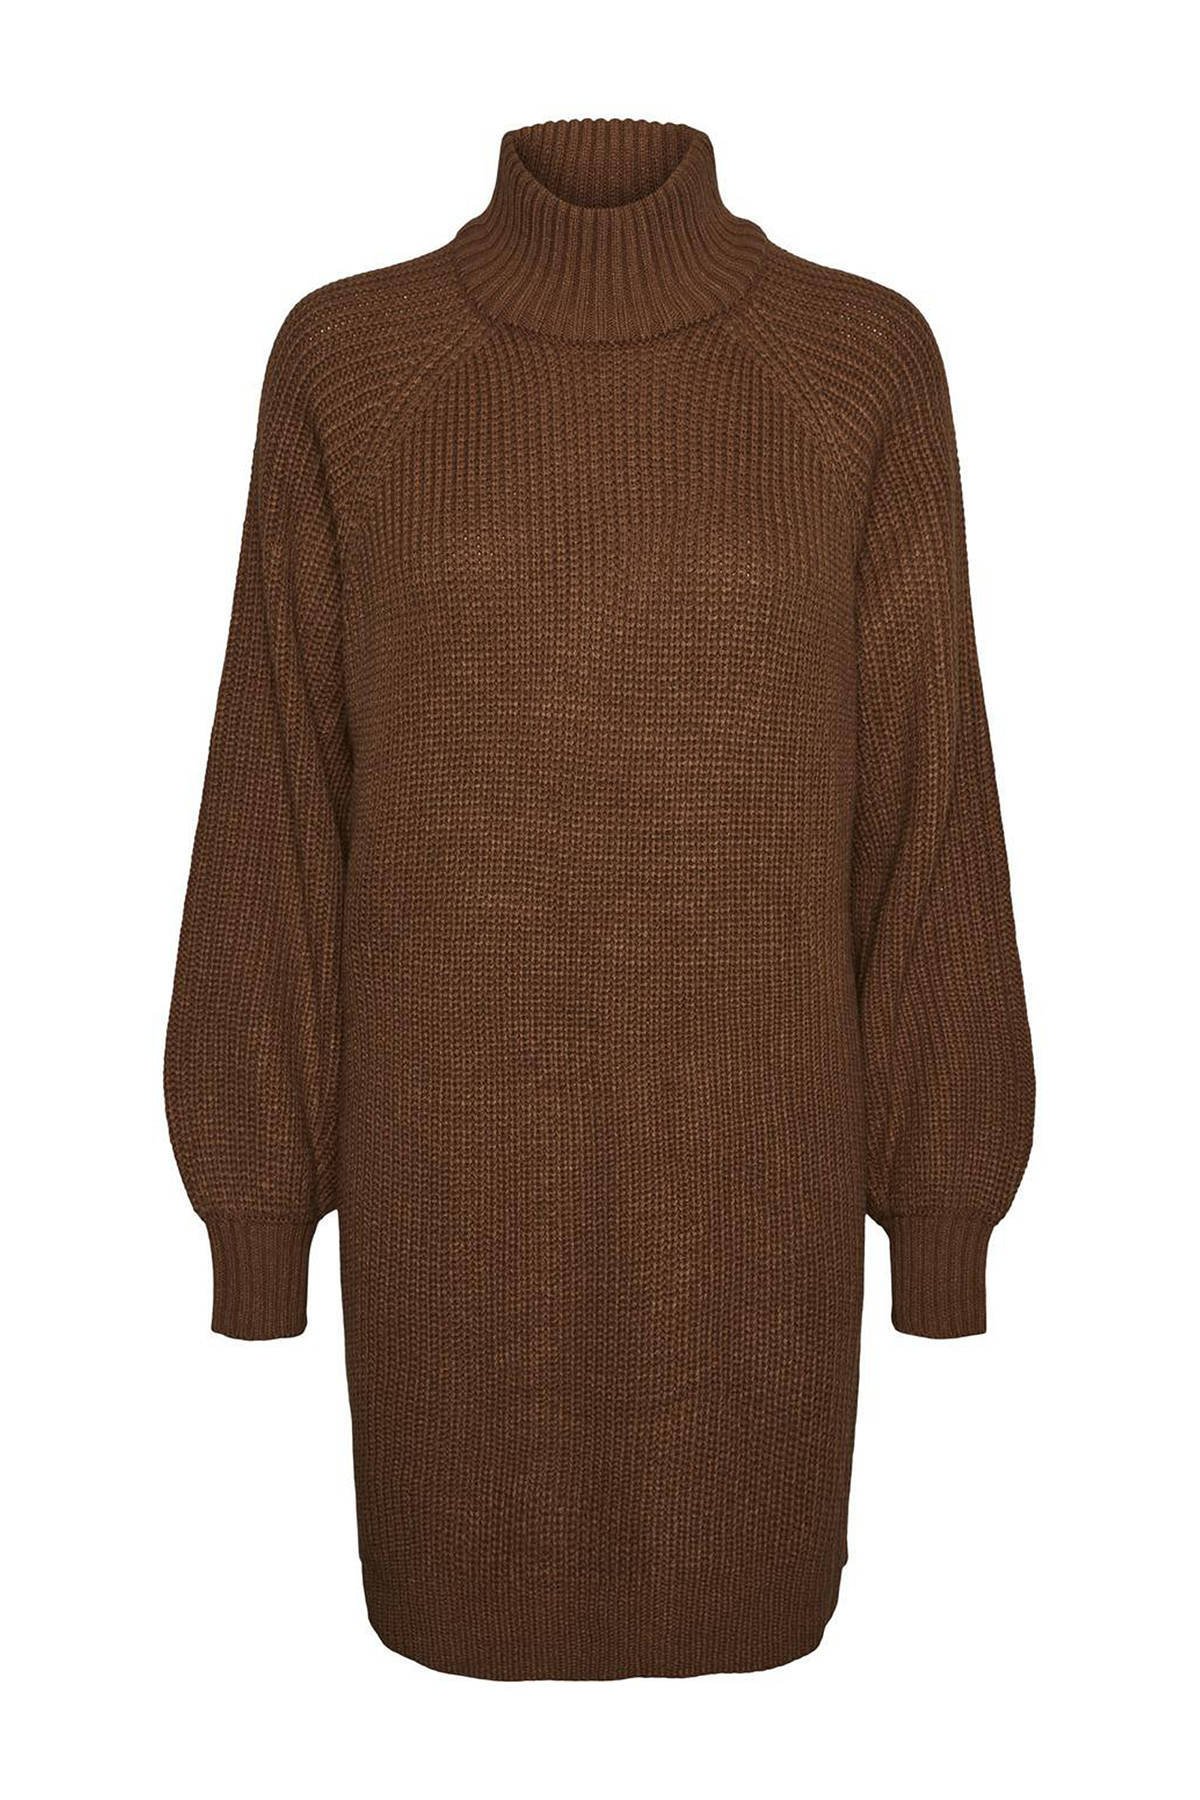 NOISY MAY gebreide jurk NMTIMMY bruin online kopen